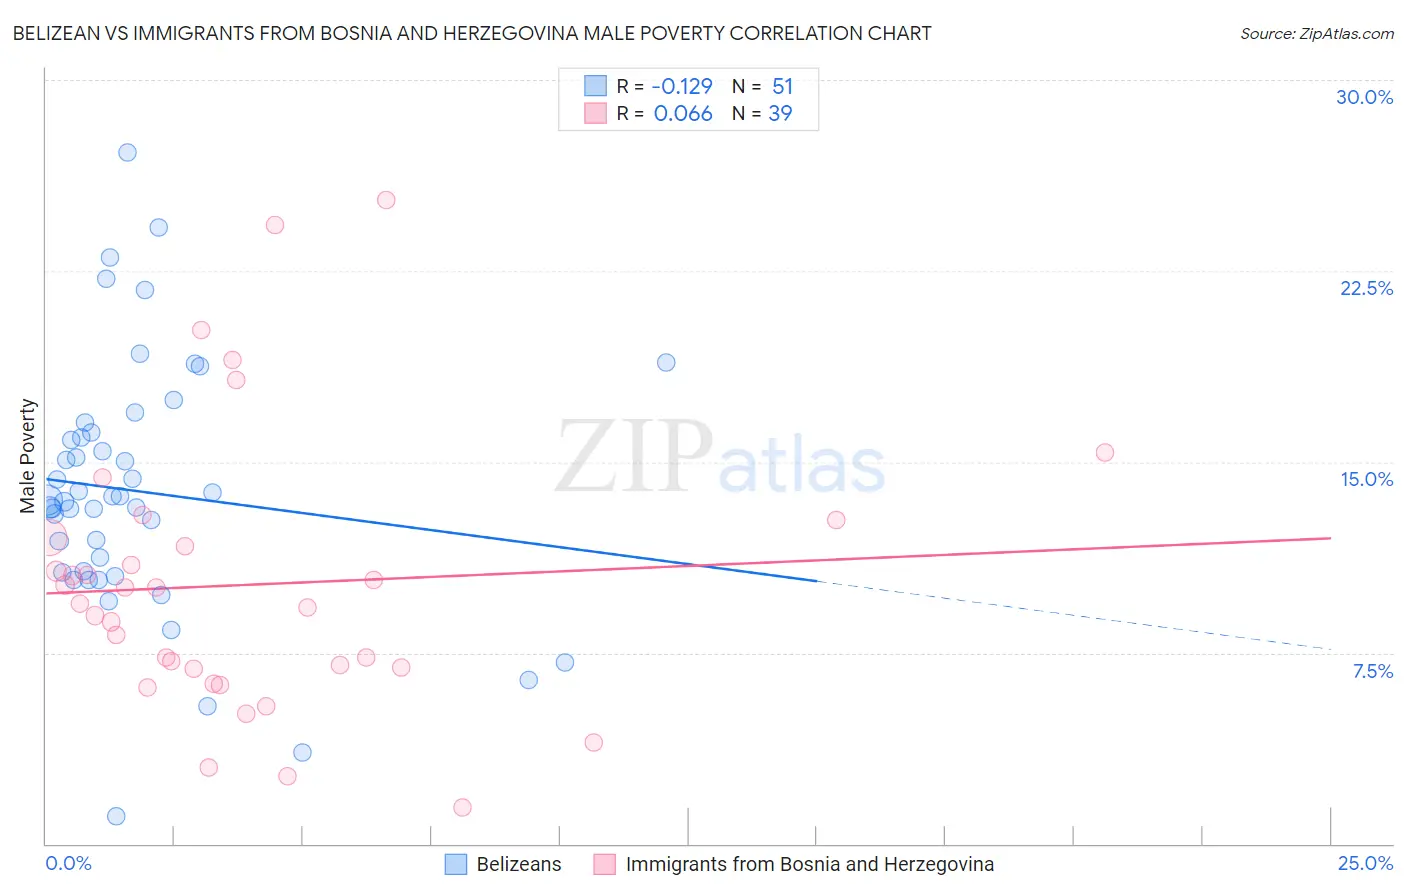 Belizean vs Immigrants from Bosnia and Herzegovina Male Poverty